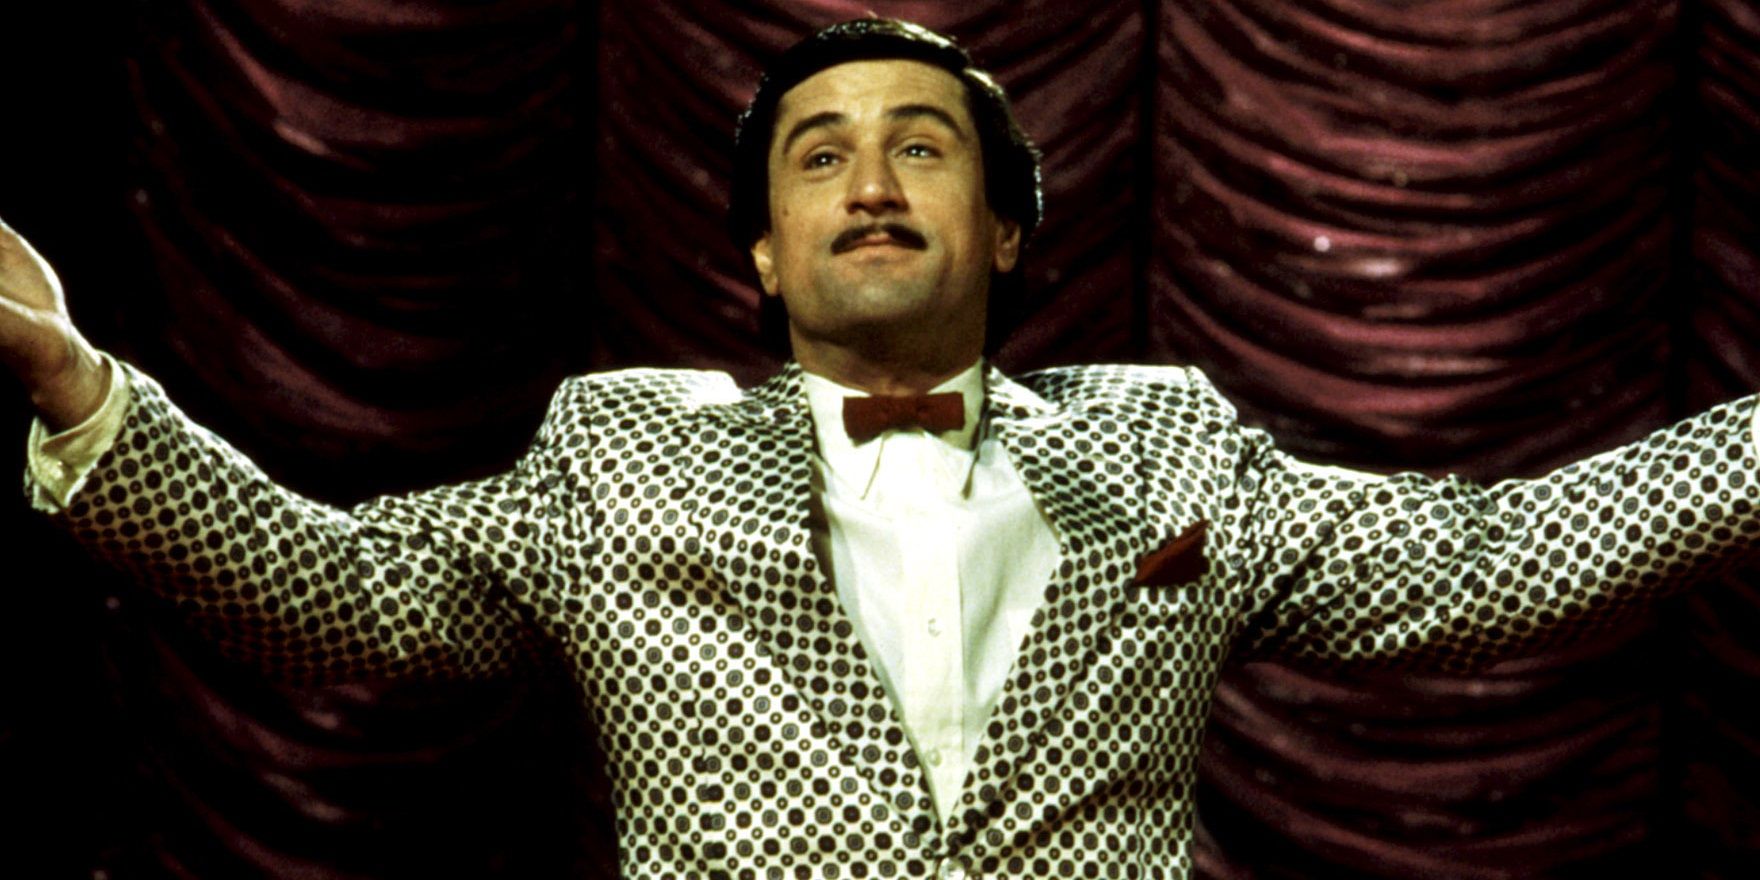 Robert De Niro as Rupert Pupkin performing in The King of Comedy